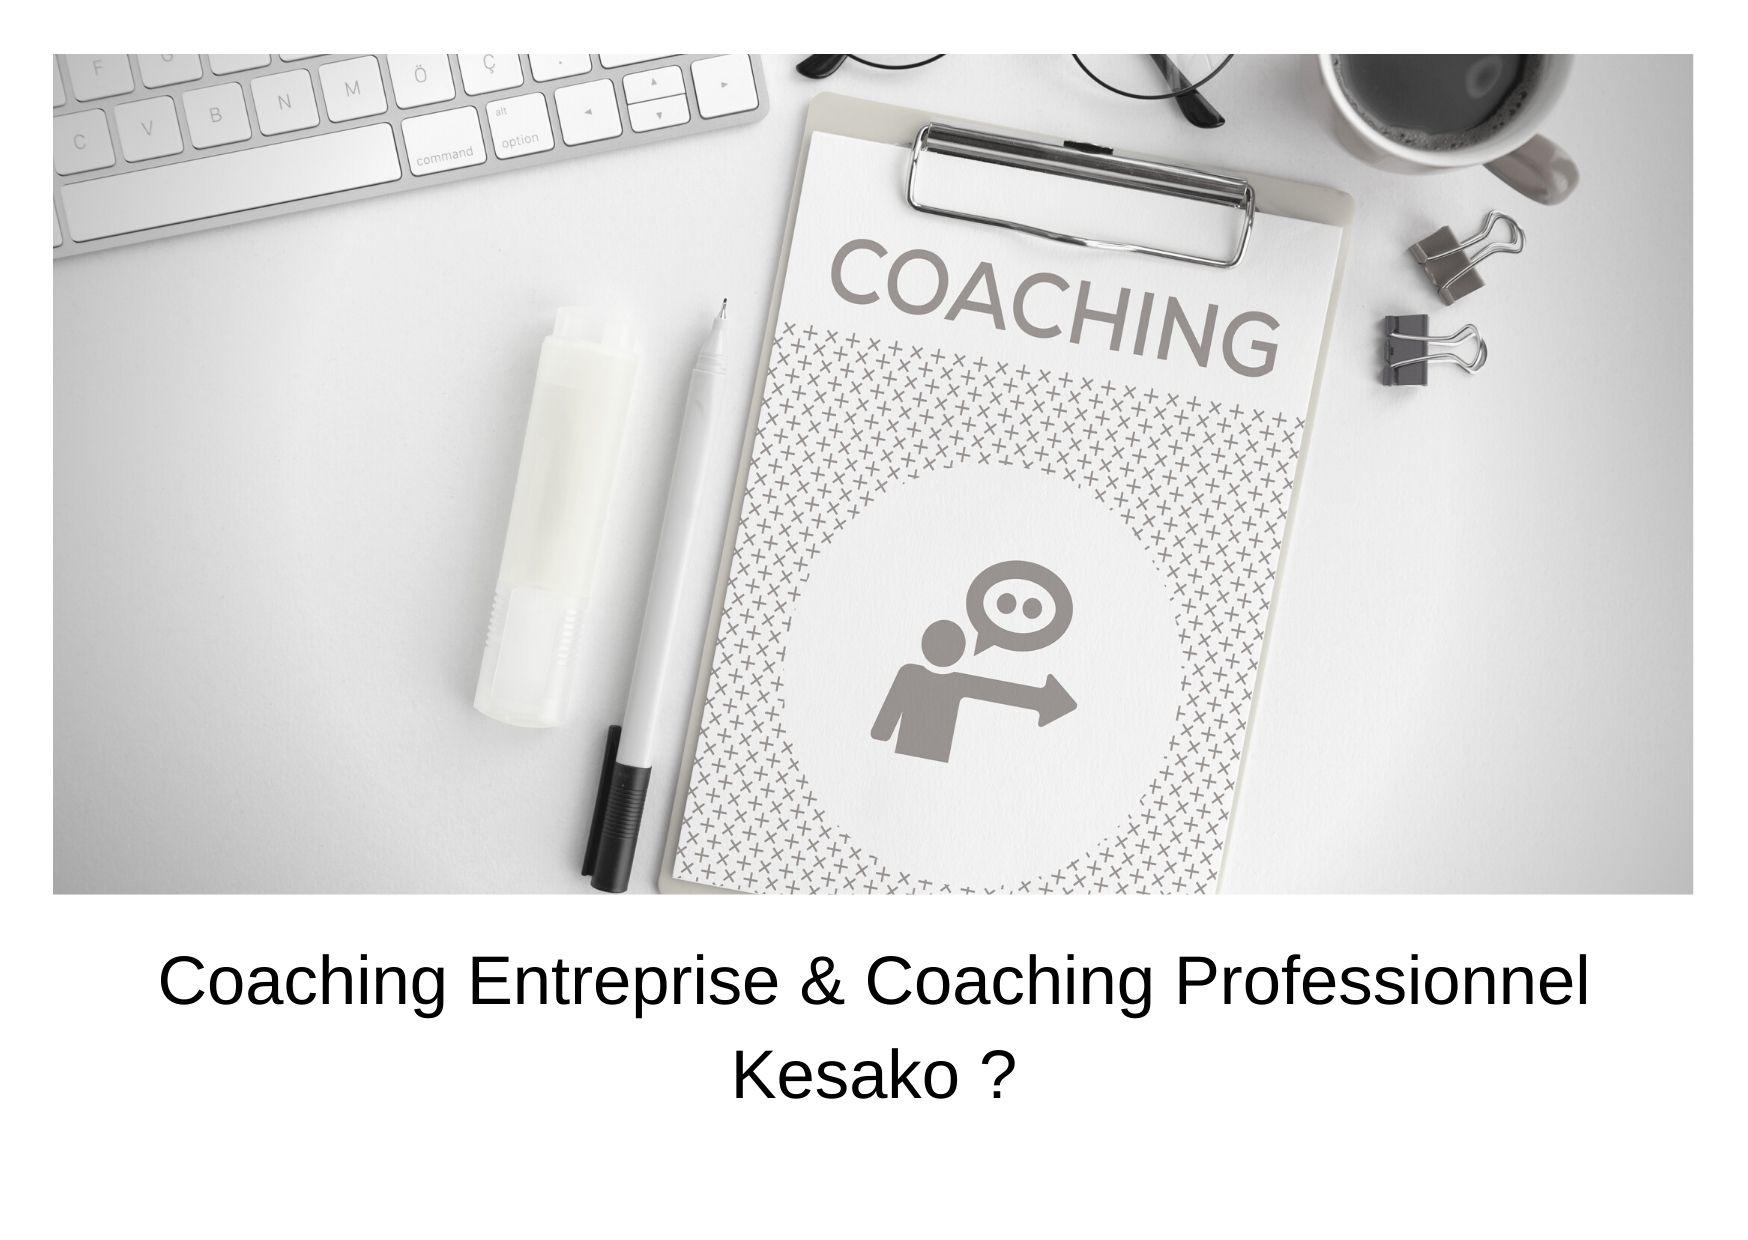 Coaching entreprise & coaching professionnel : Kesako ?